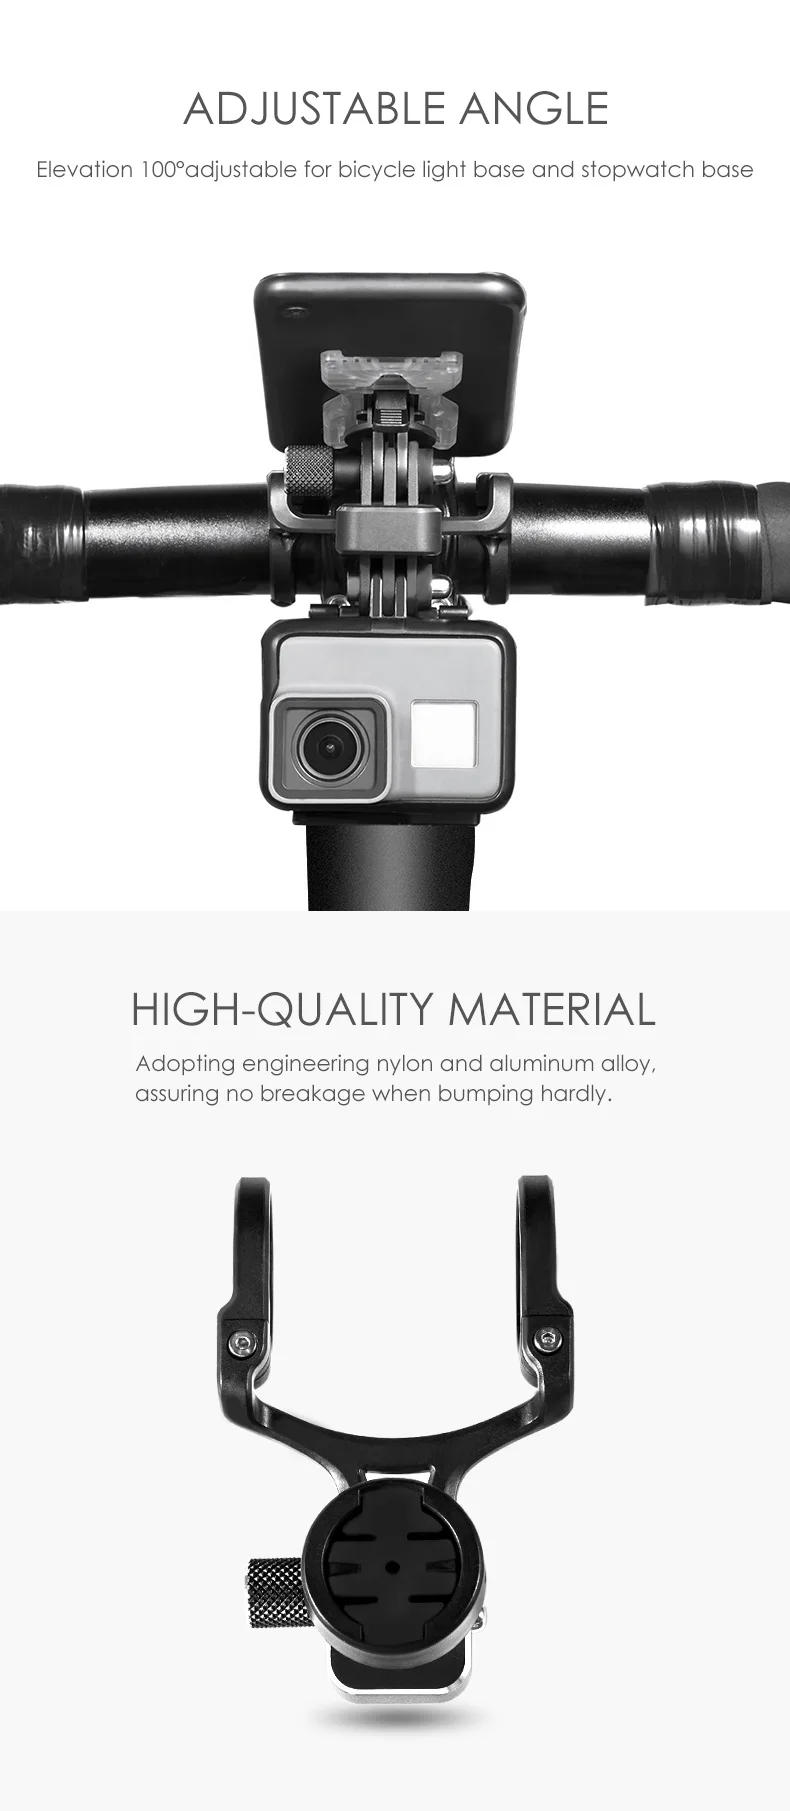 bike mobile camera holder